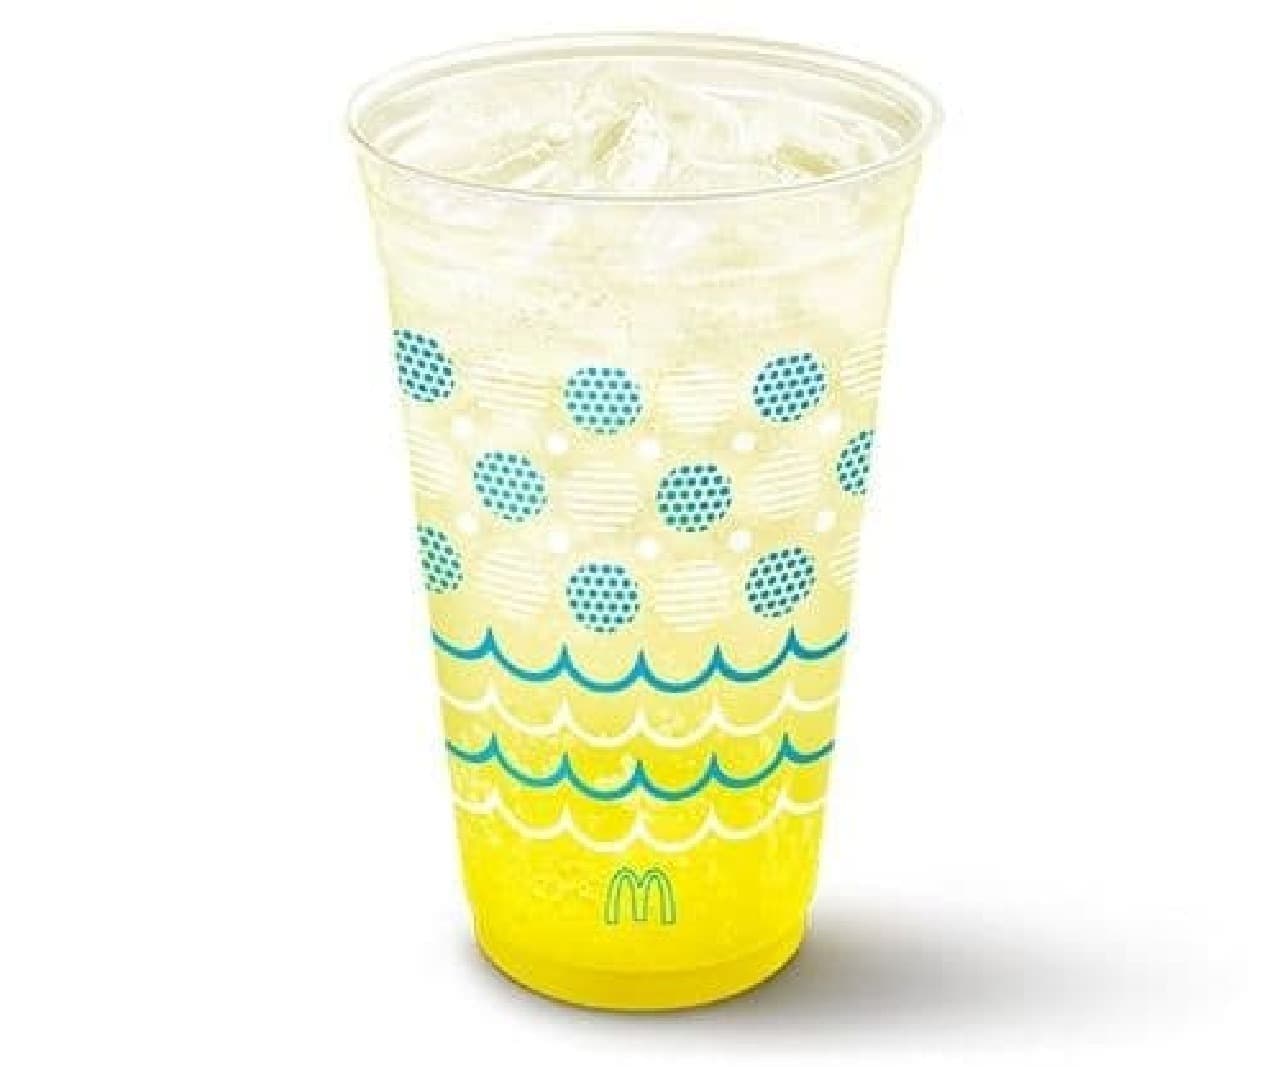 McDonald's "McFizz Setouchi Lemonade".